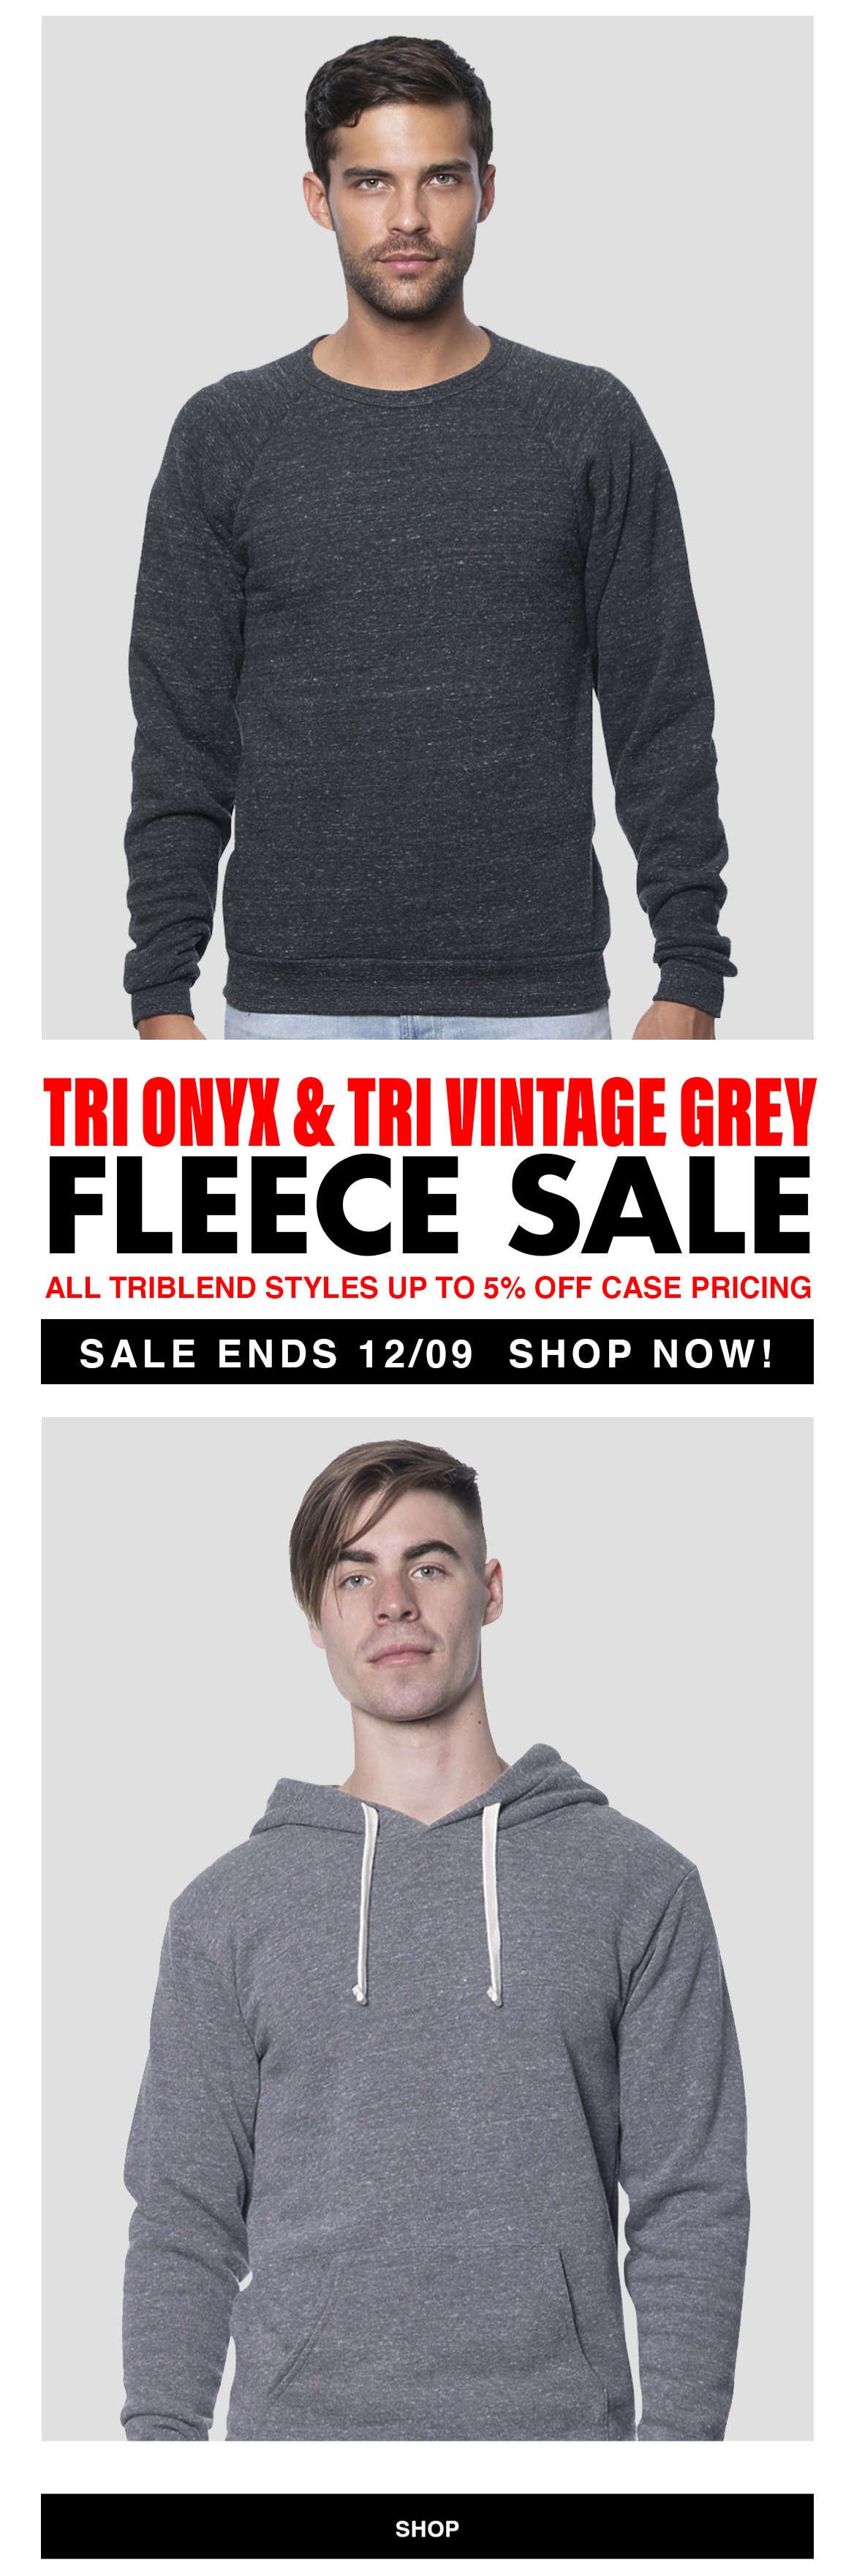  Triblend Fleece Sale